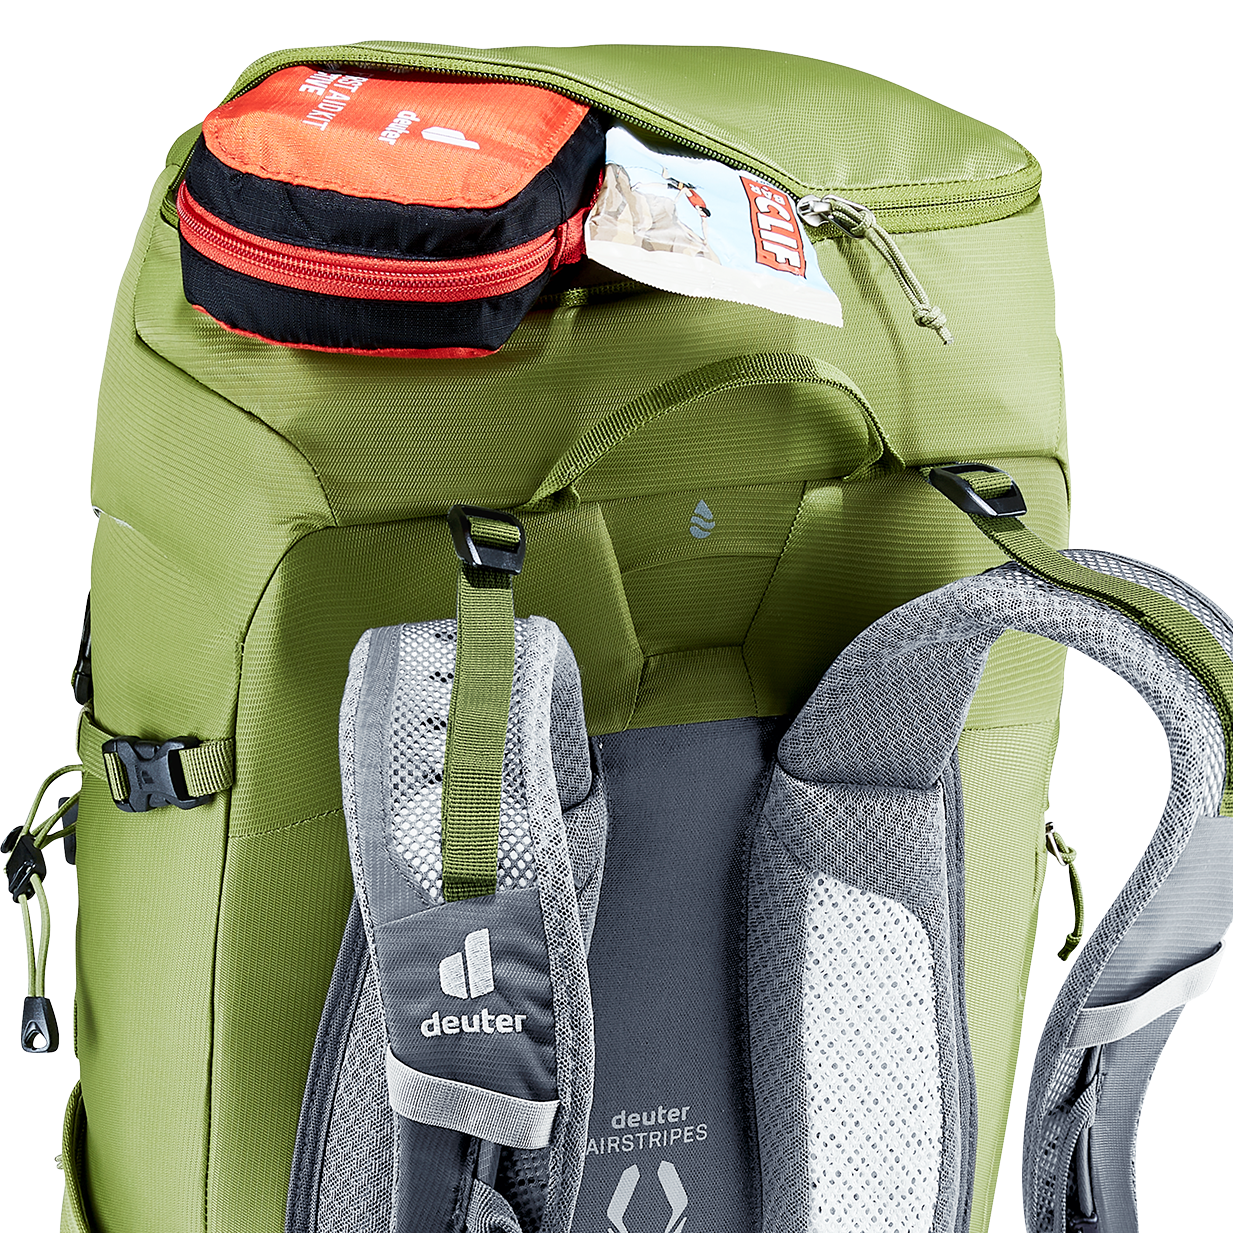 Deuter Unisex – Adult's Futura Pro 36 Hiking Backpack